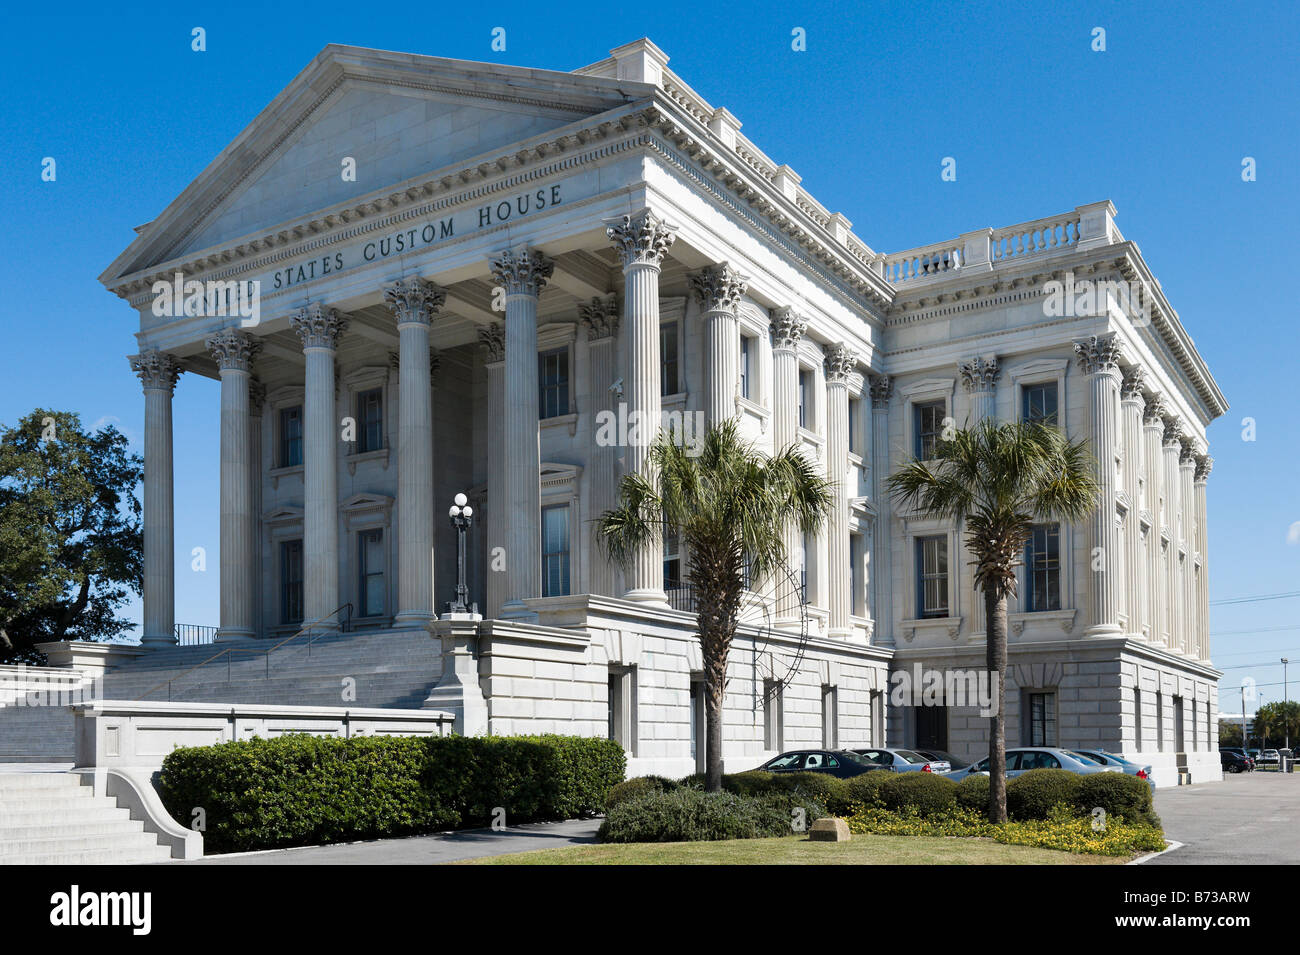 United States Custom House dans le quartier historique, East Bay Street, Charleston, Caroline du Sud, USA Banque D'Images